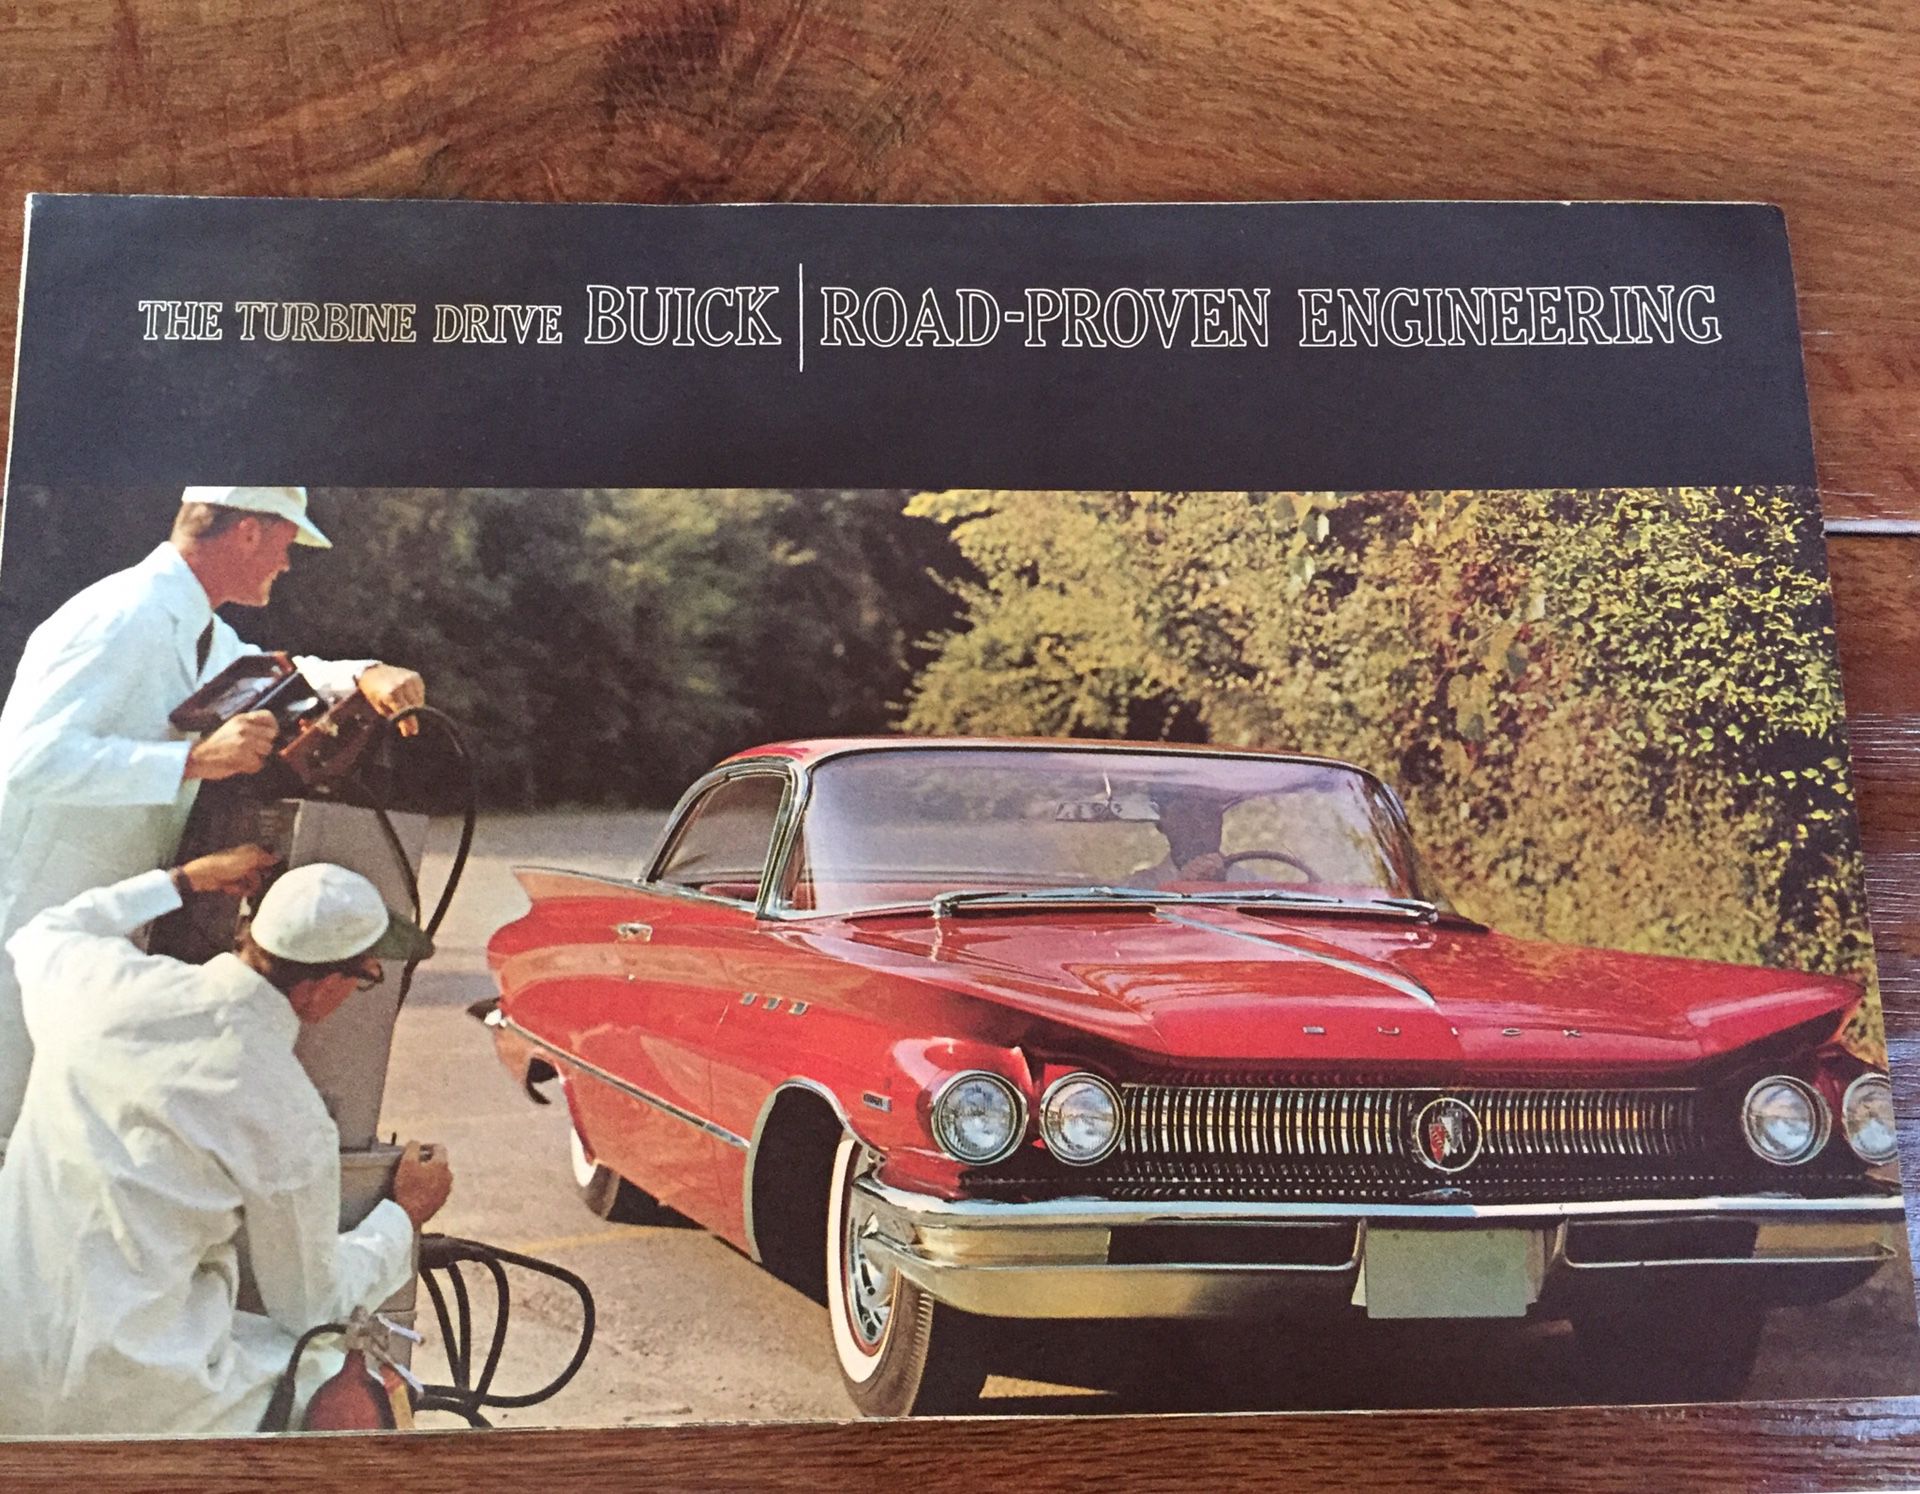 1960’s Buick turbine drive sales brochure